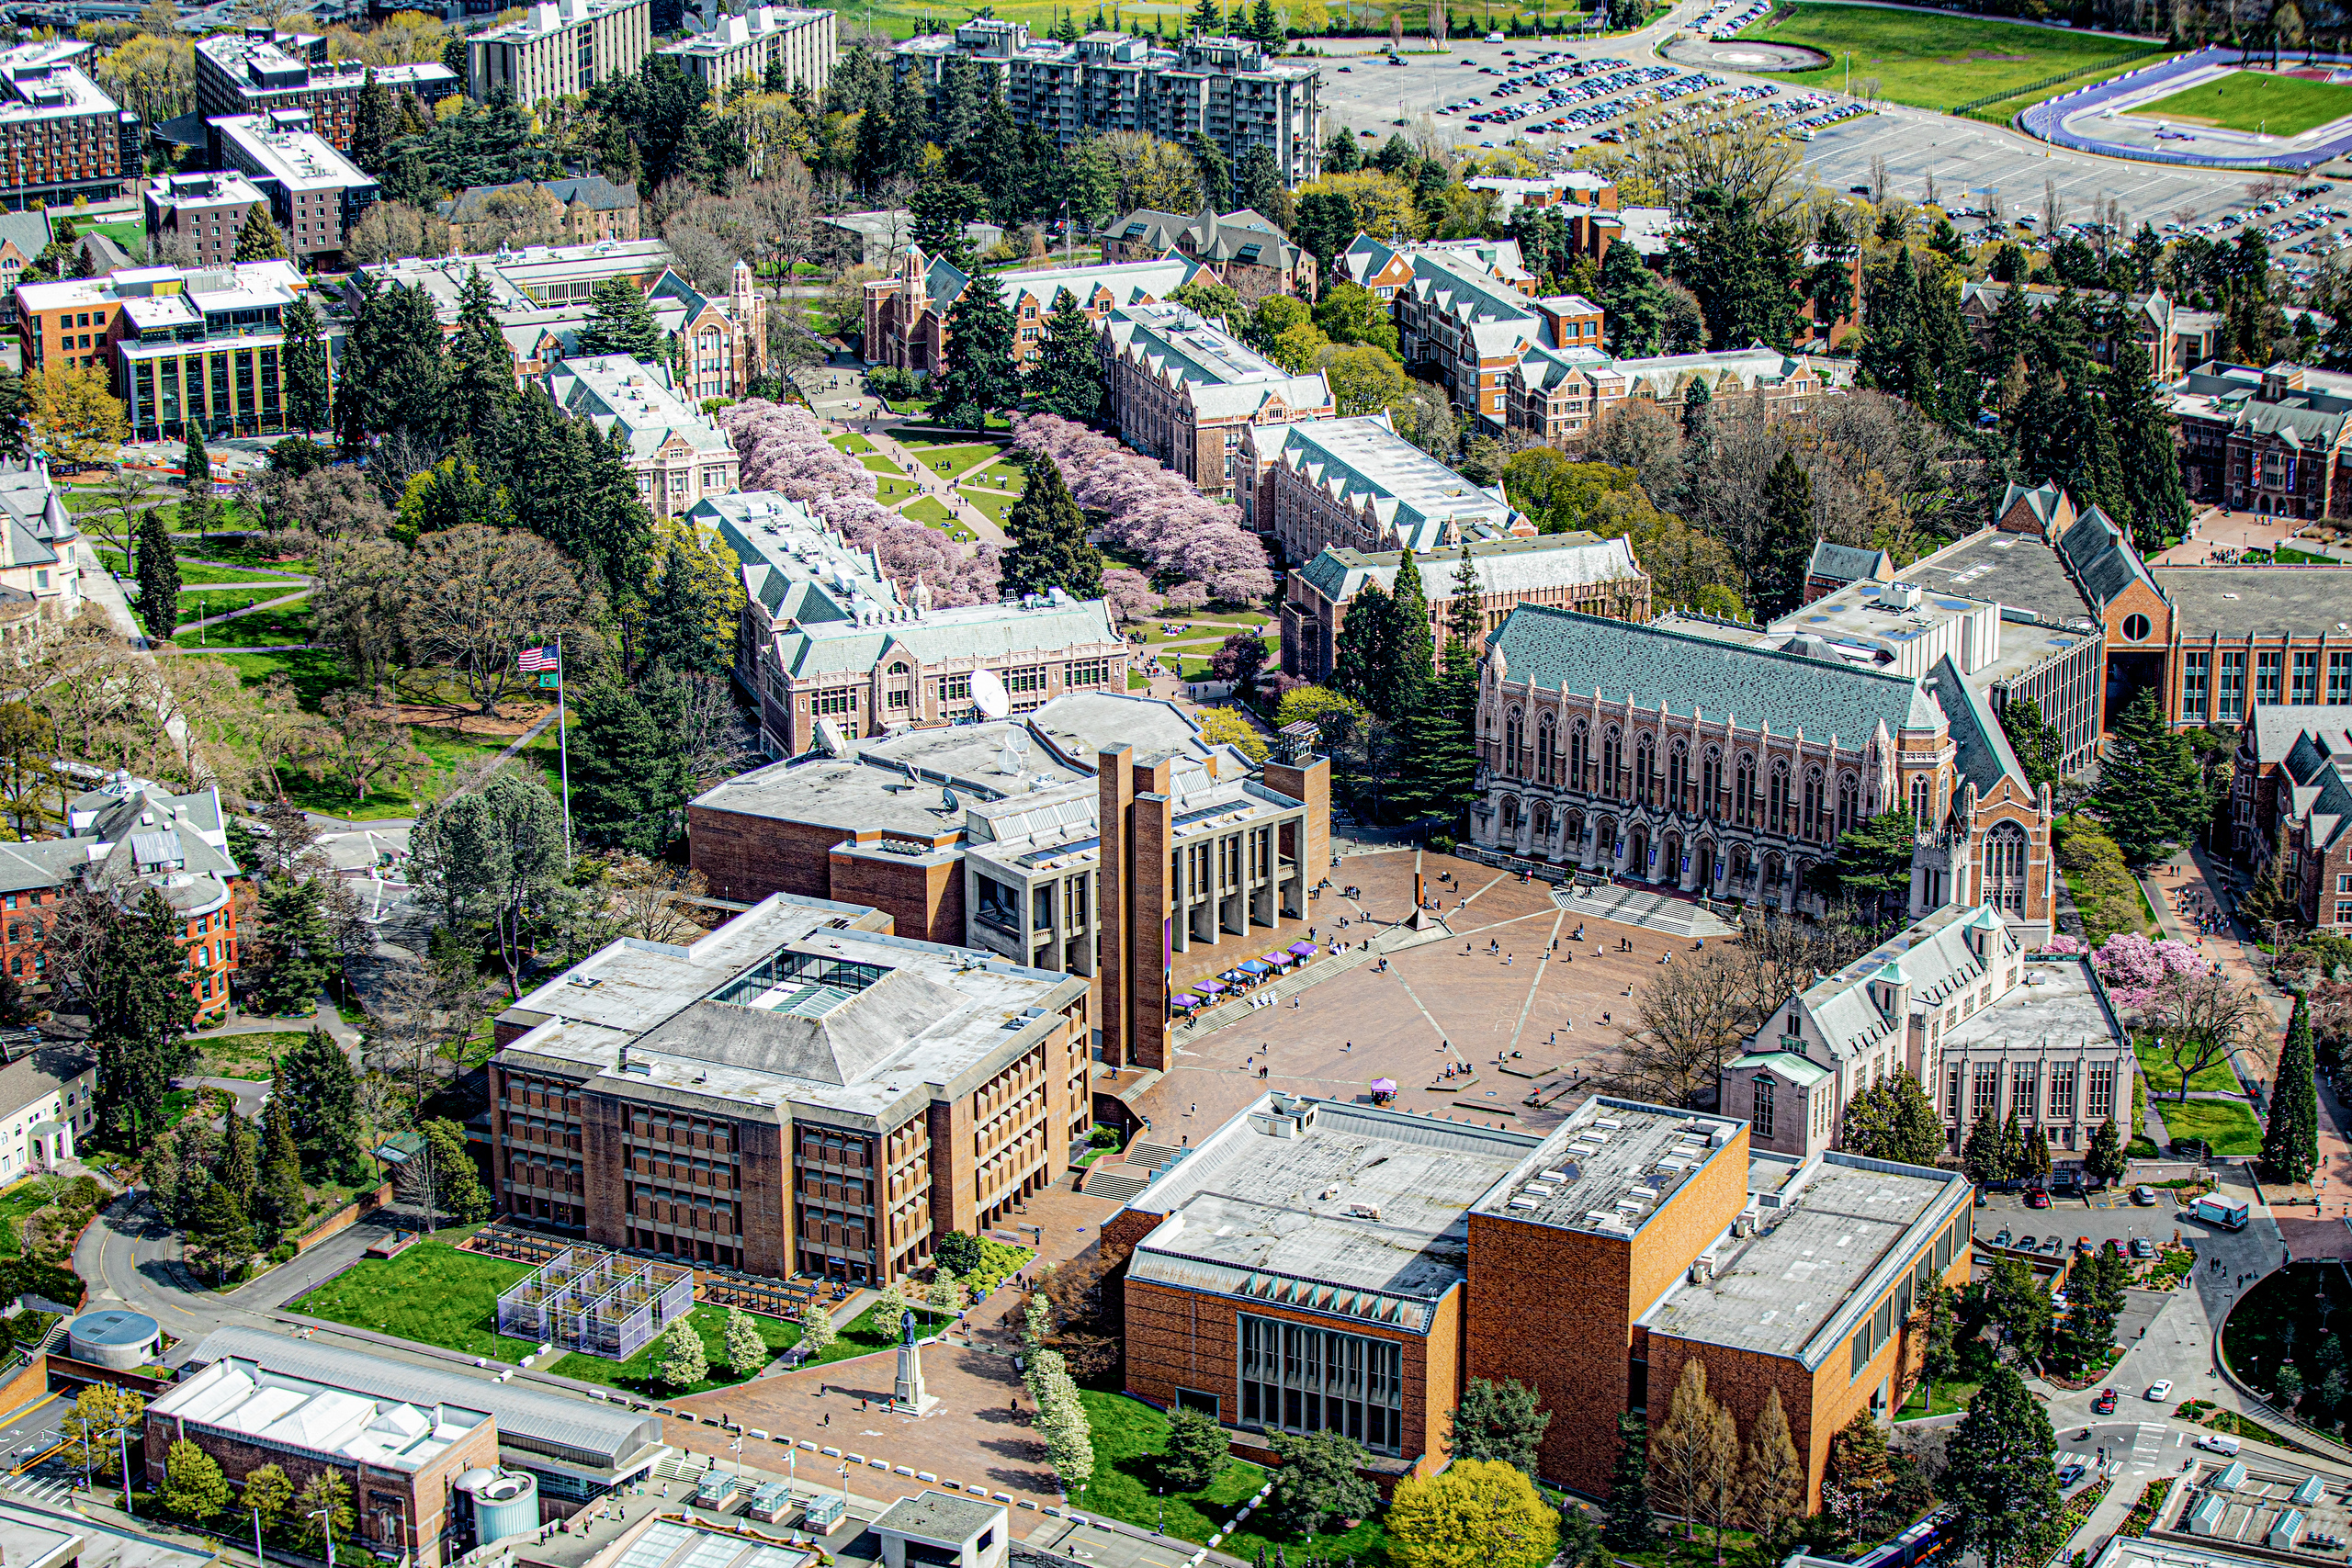 Birds eye view of campus